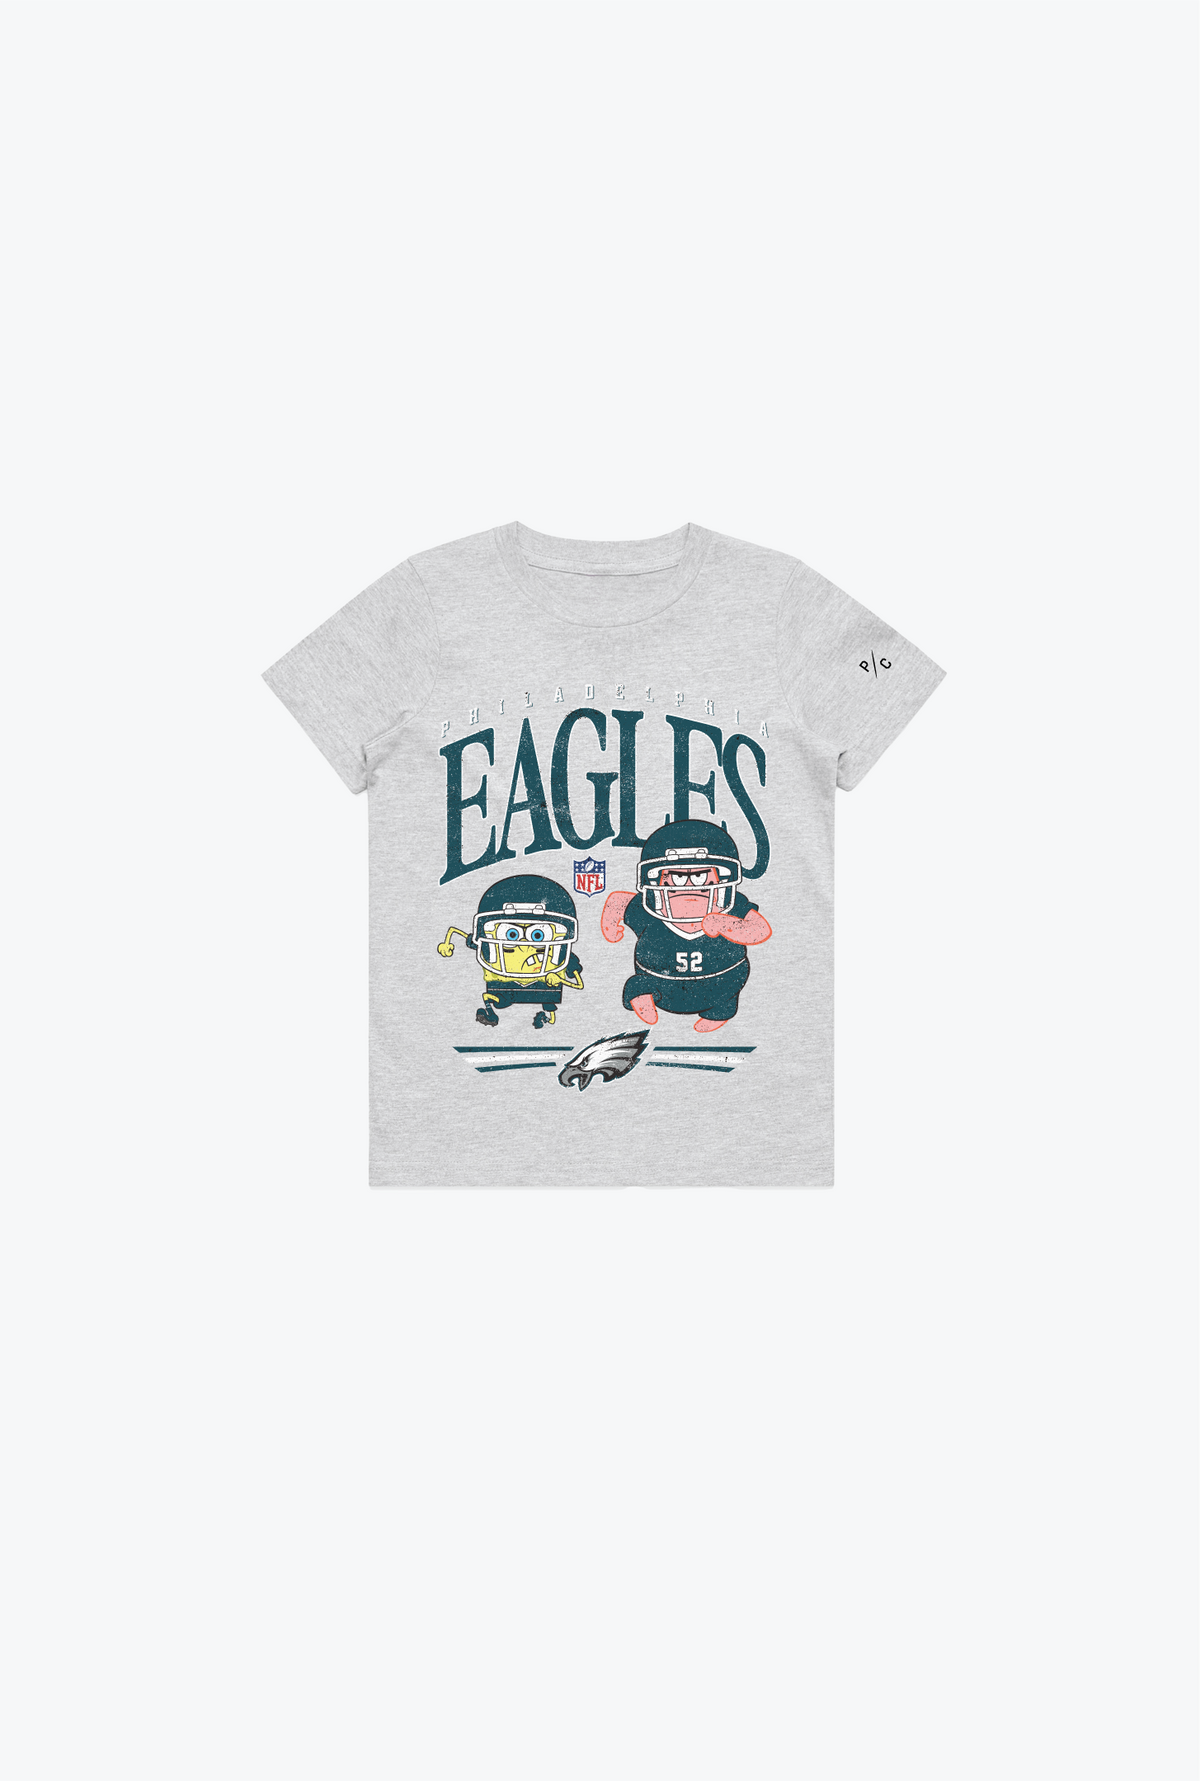 Spongebob & Patrick Rush Kids T-Shirt - Philadelphia Eagles